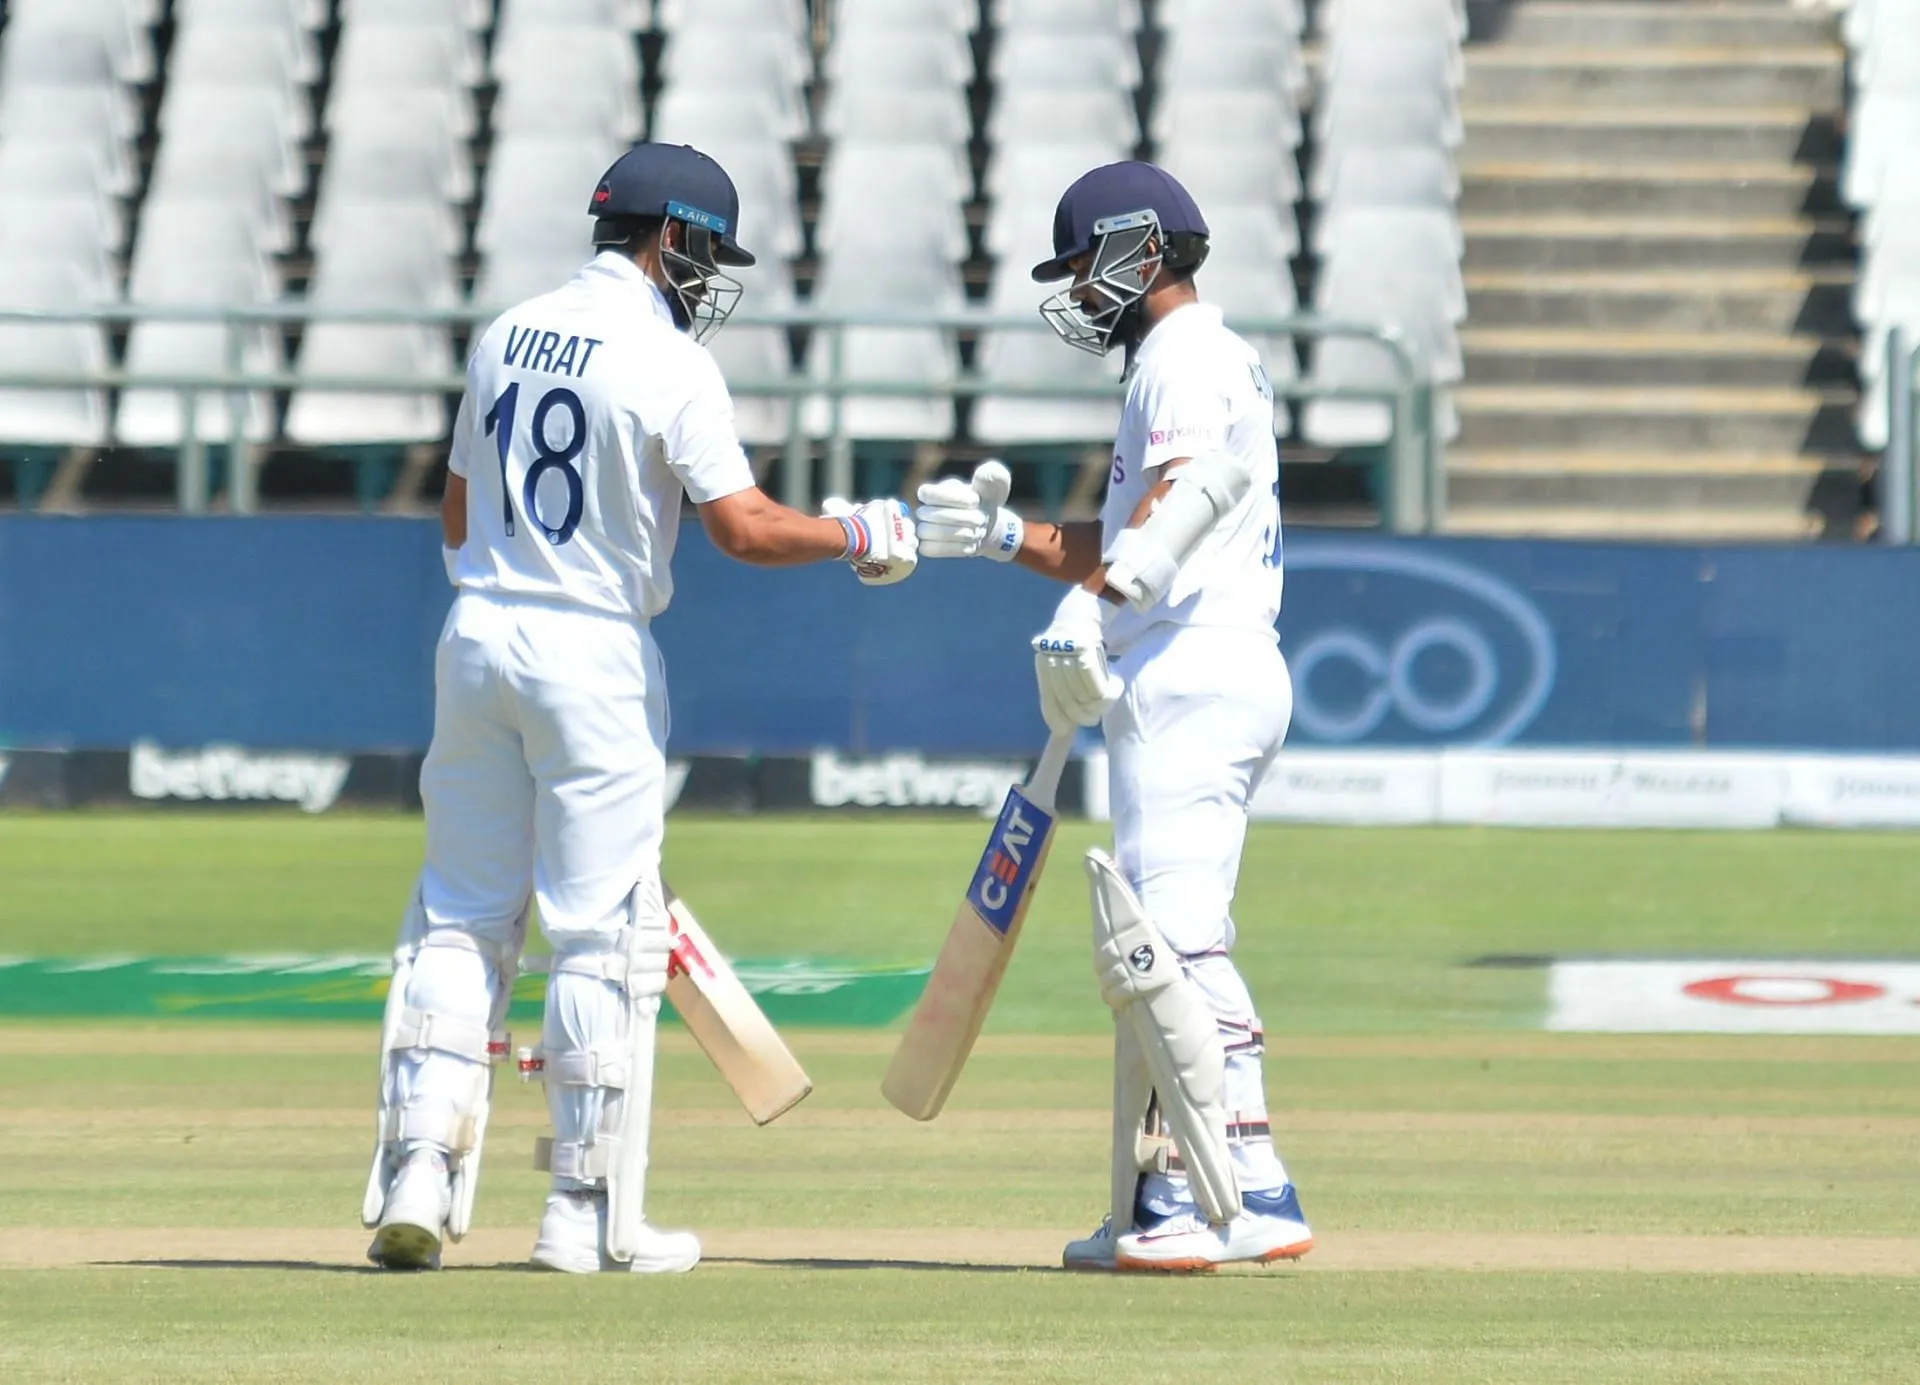 Virat Kohli and Ajinkya Rahane during the Cape Town Test. (Photo Source: Twitter)